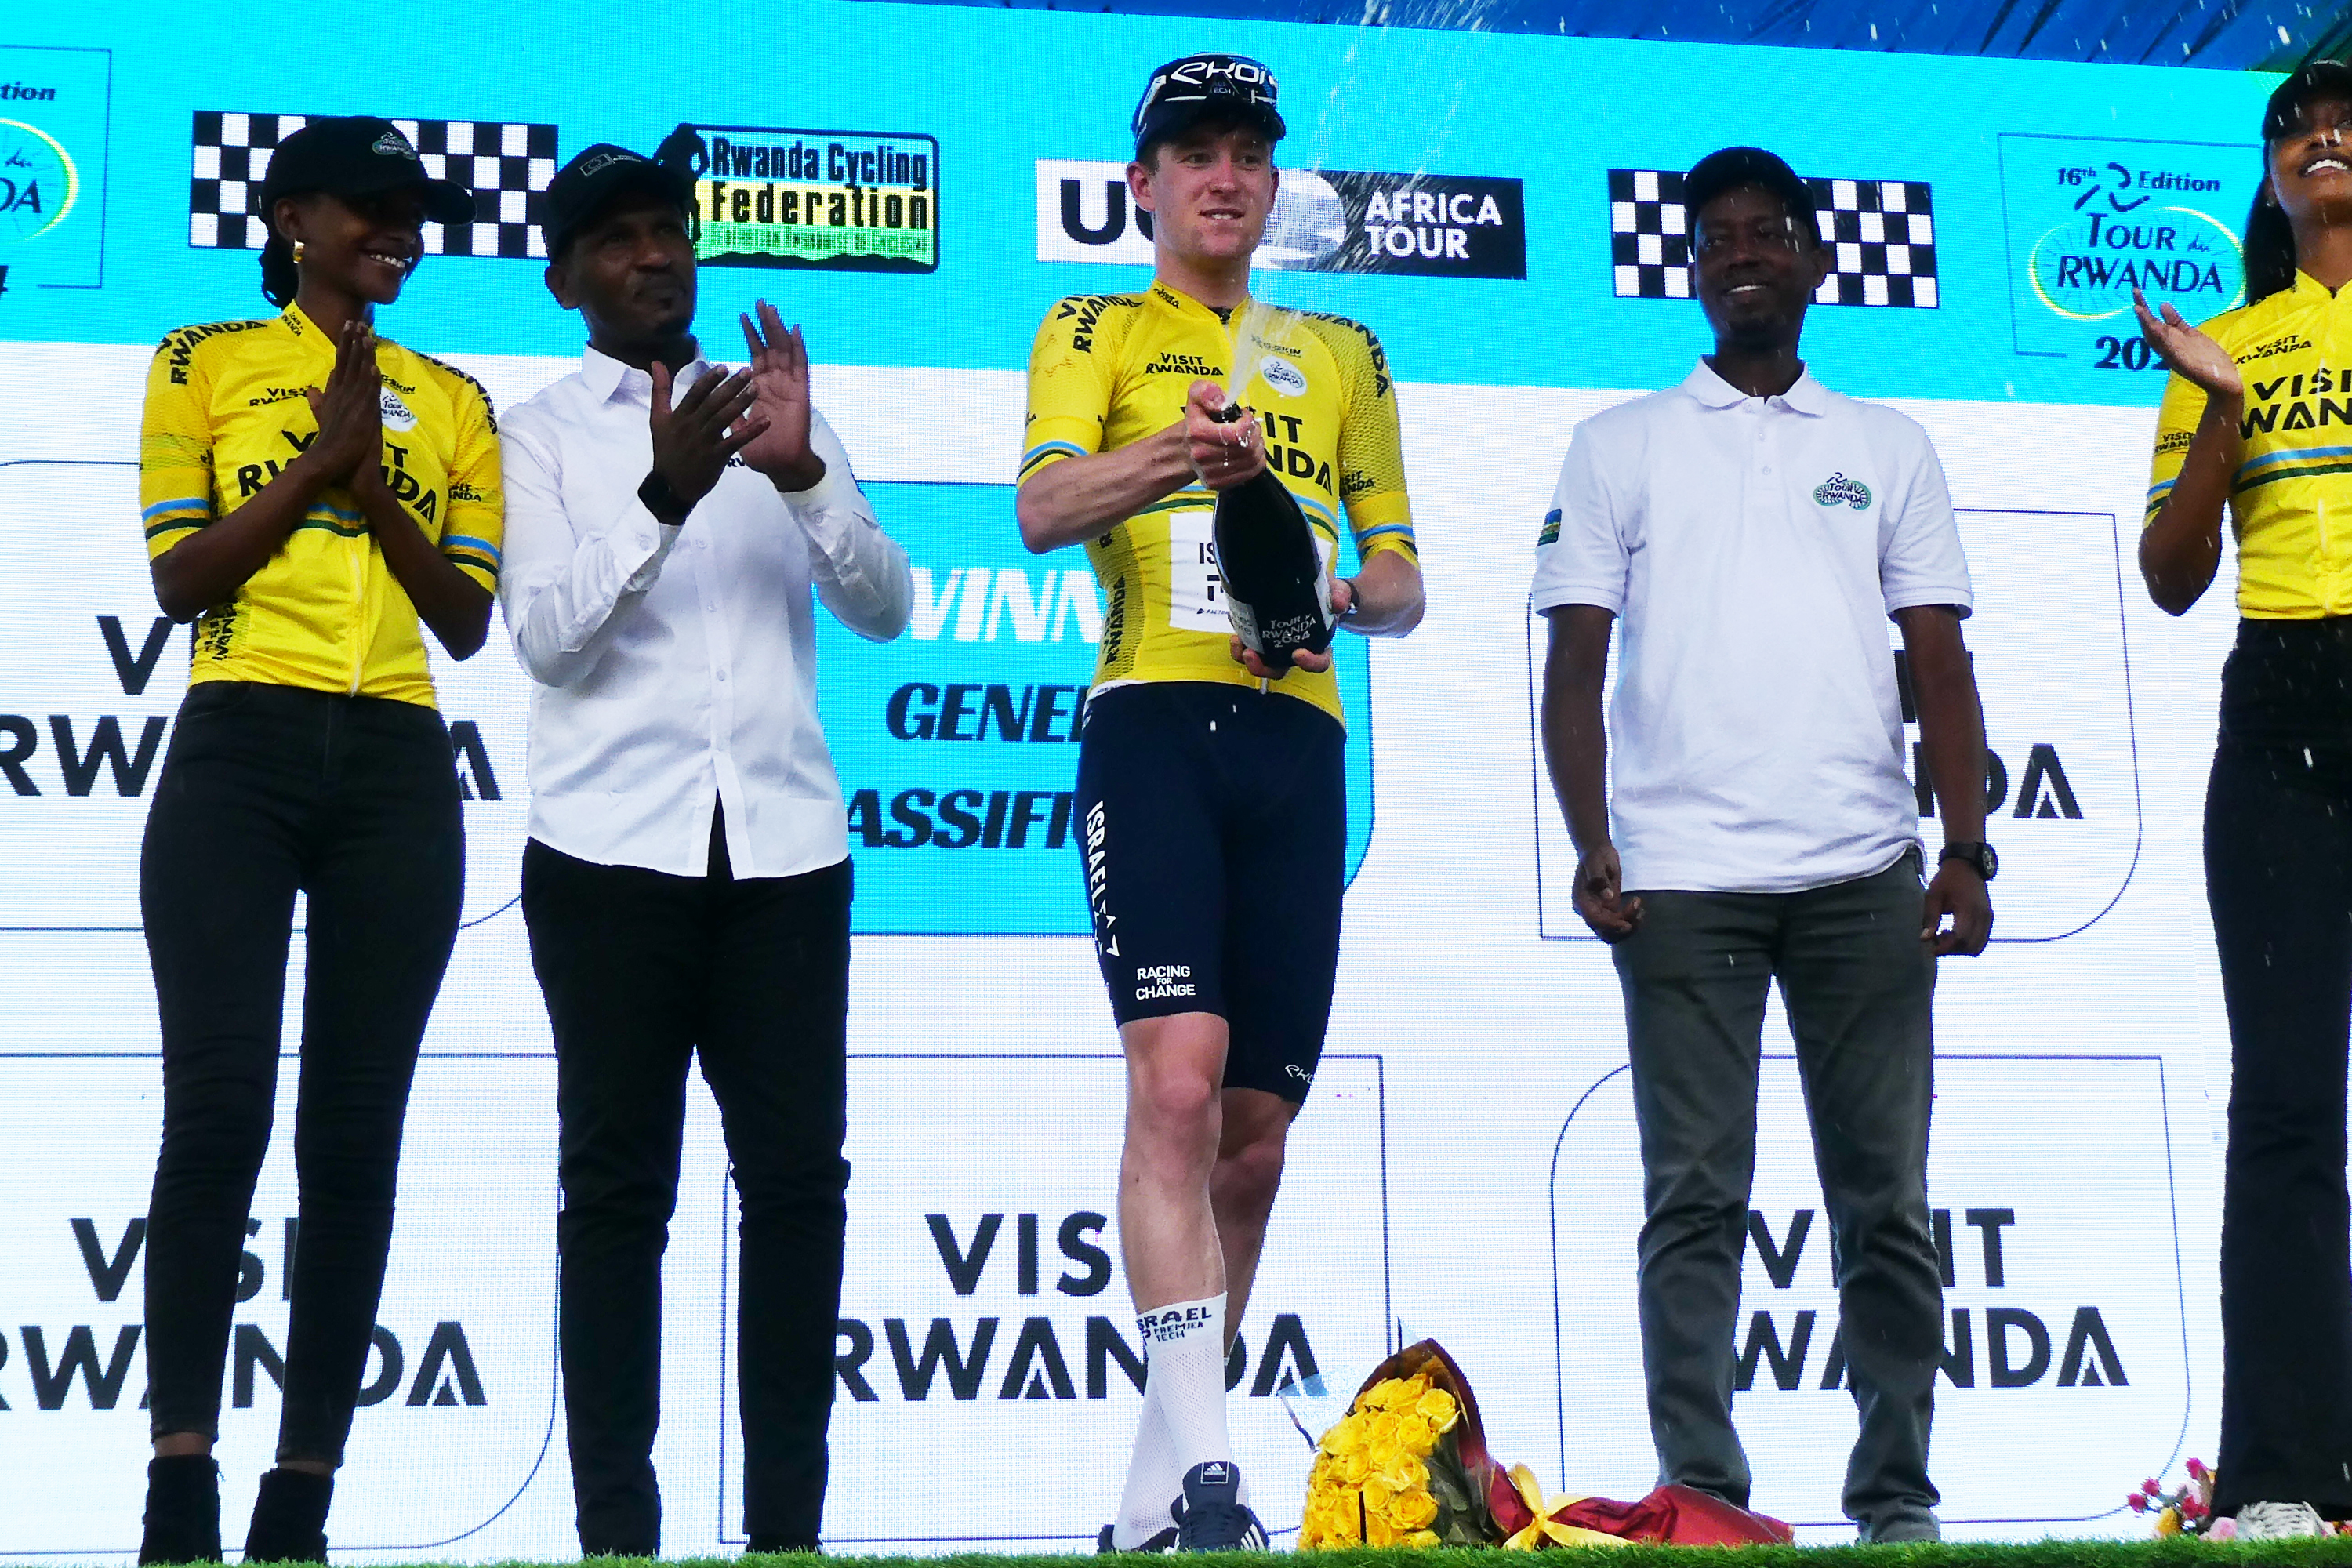 Joe Blackmore in the Tour du Rwanda yellow jersey